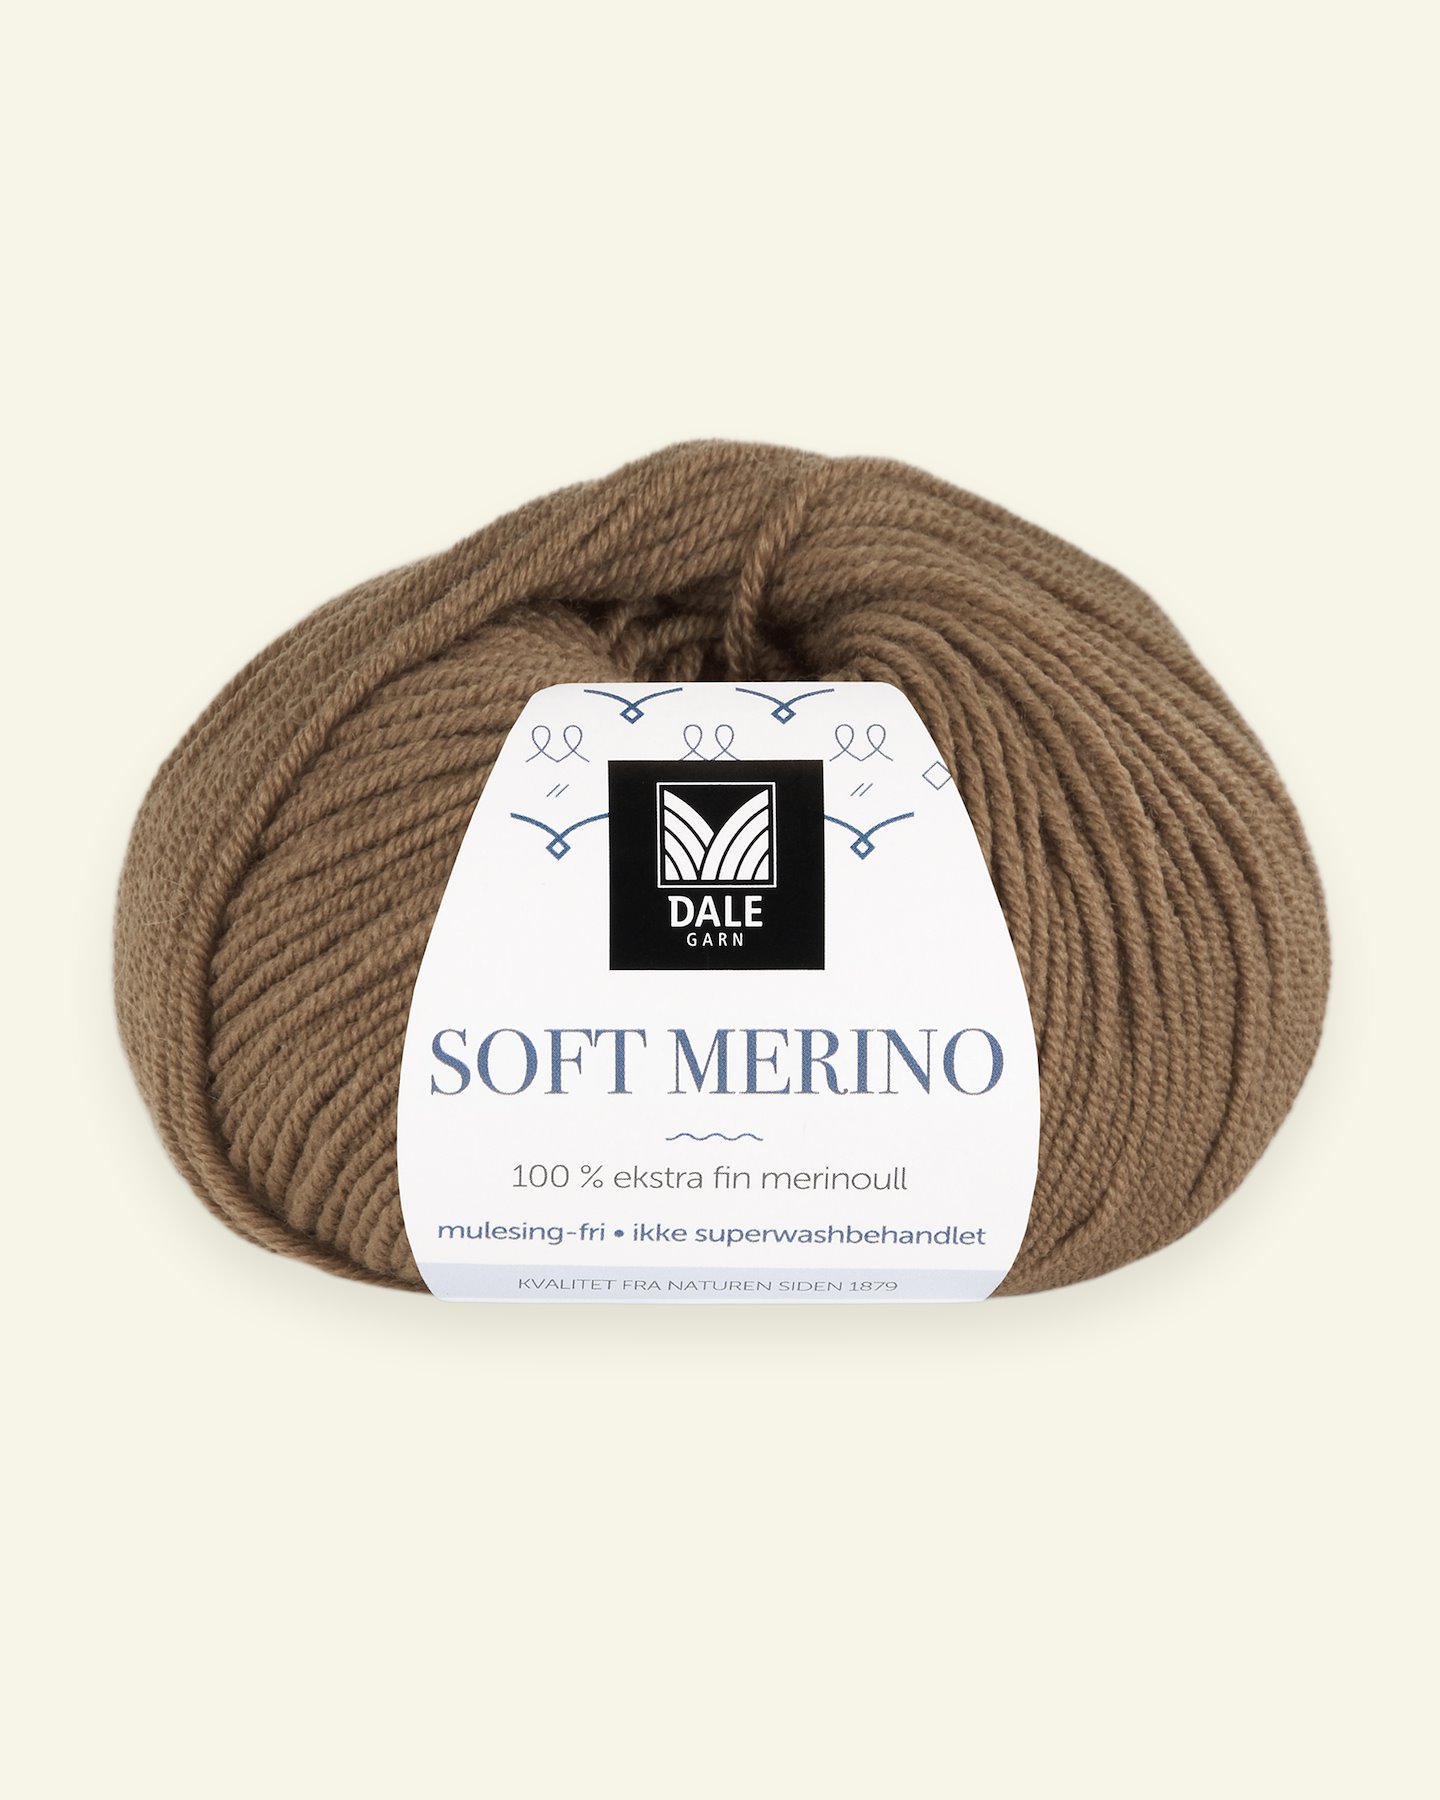 Dale Garn, 100% Extrafeine Merino-Wolle "Soft Merino", nussbraun (3038) 90000359_pack